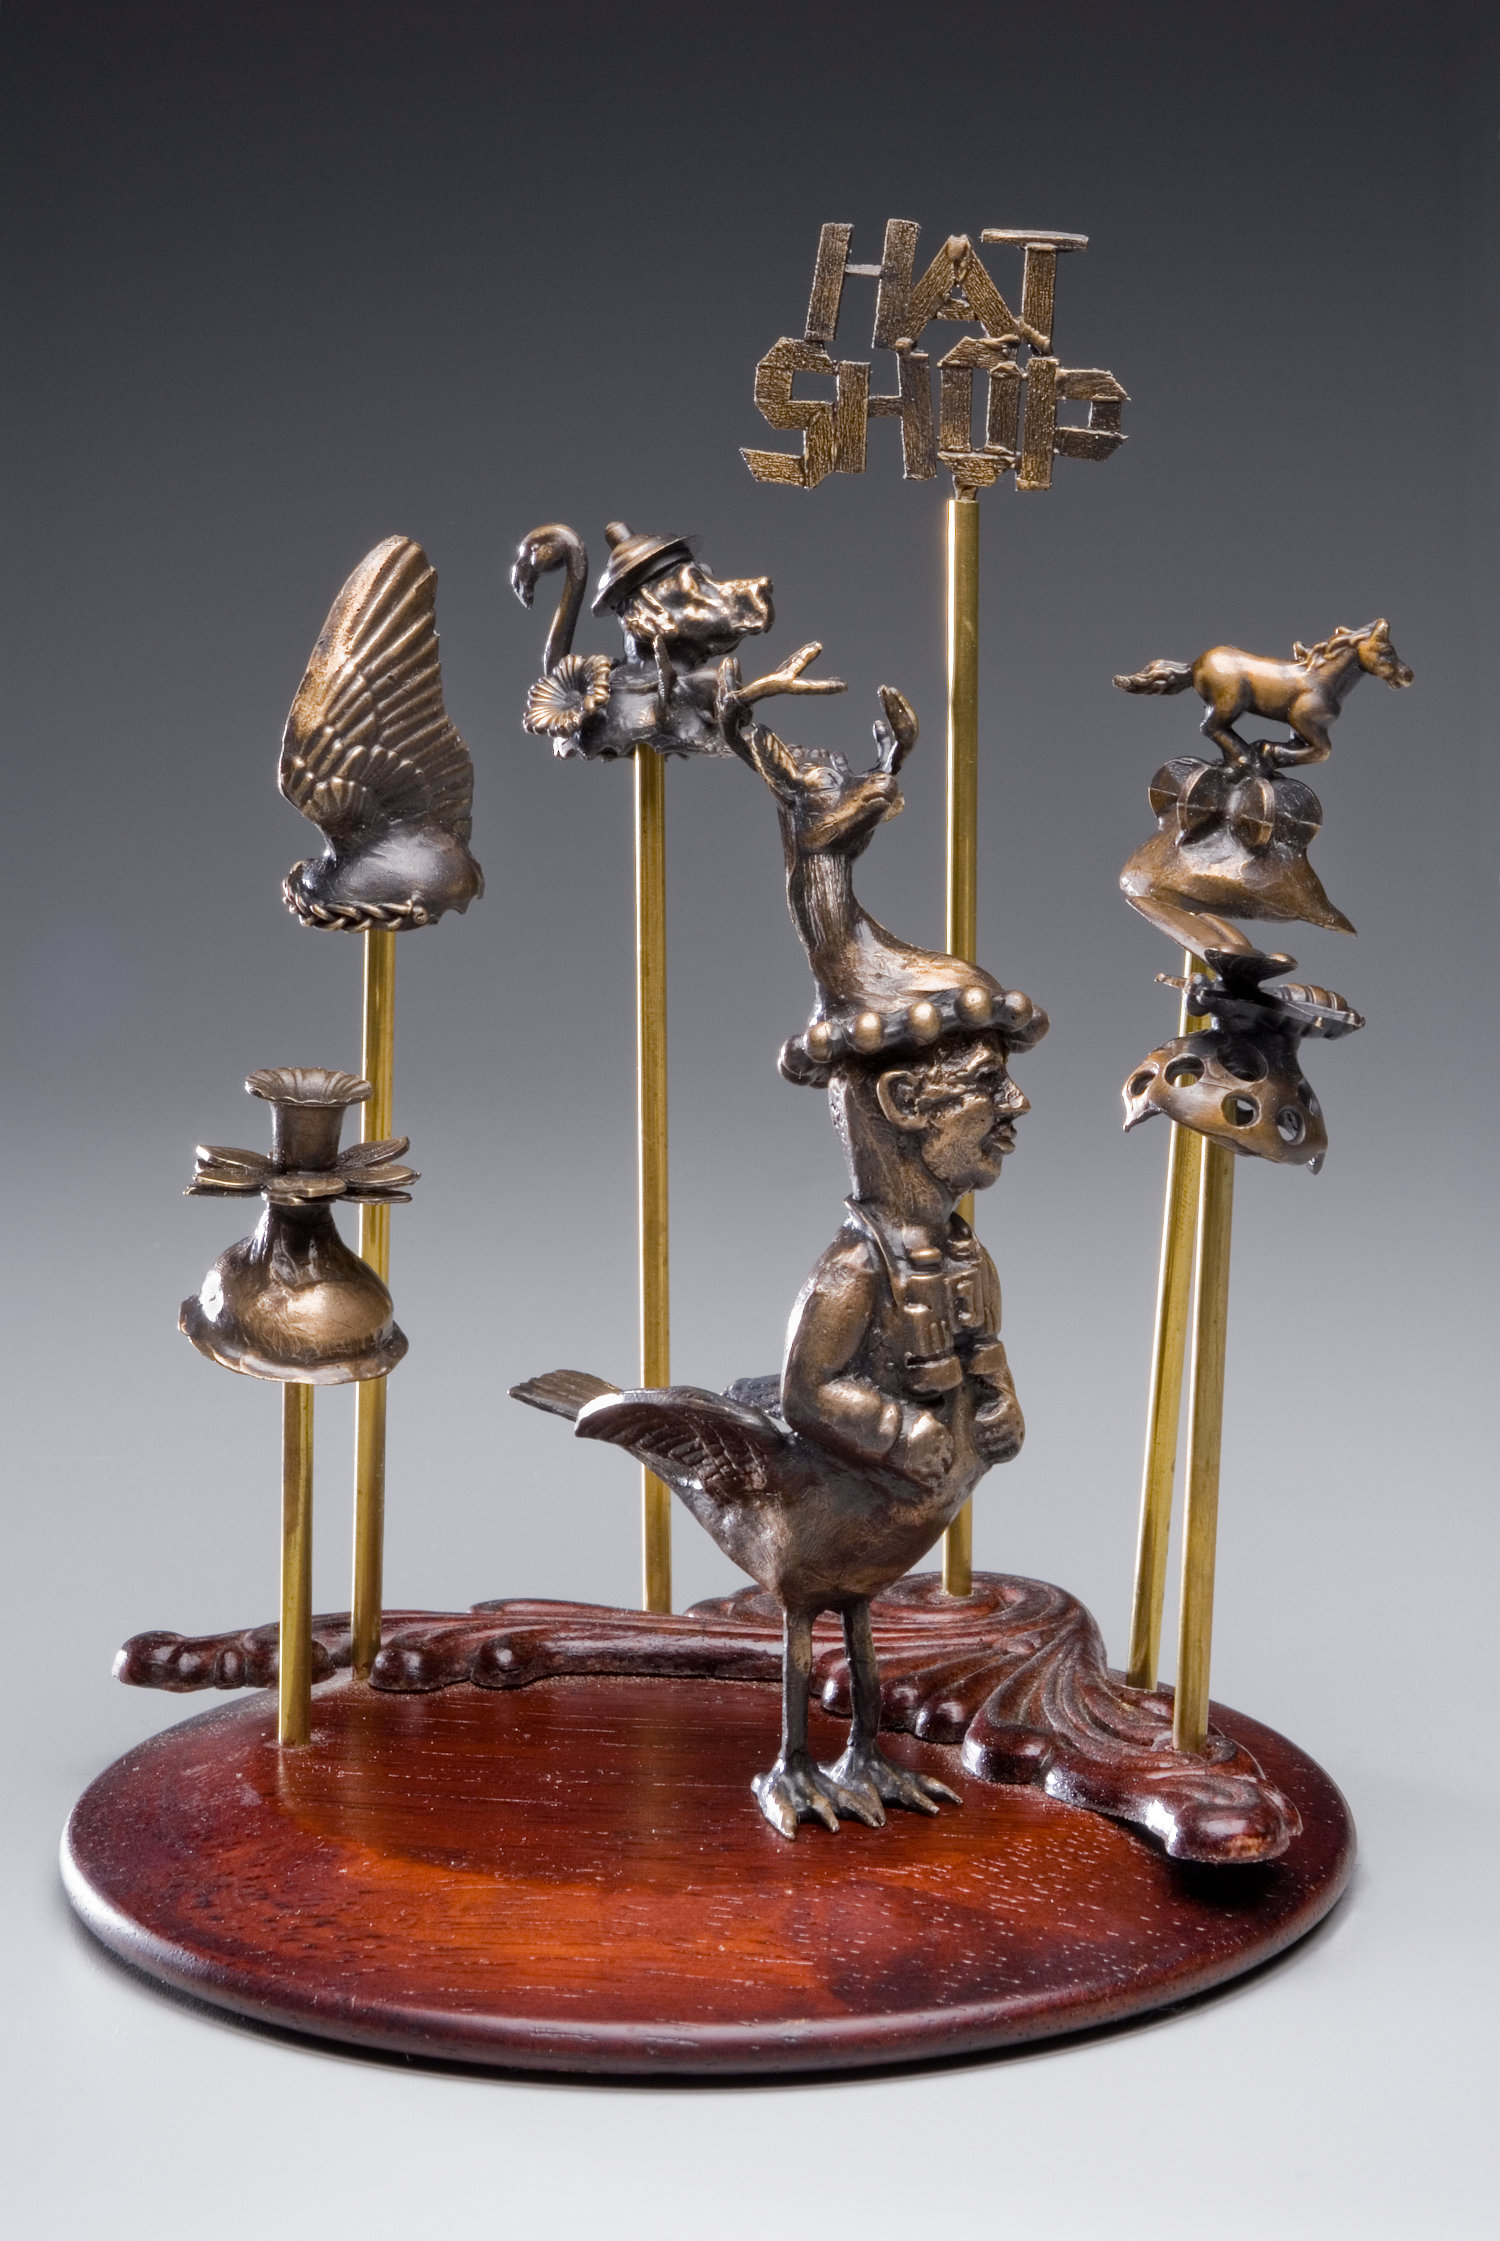 Birdwatcher in the Hat Shop (bronze)